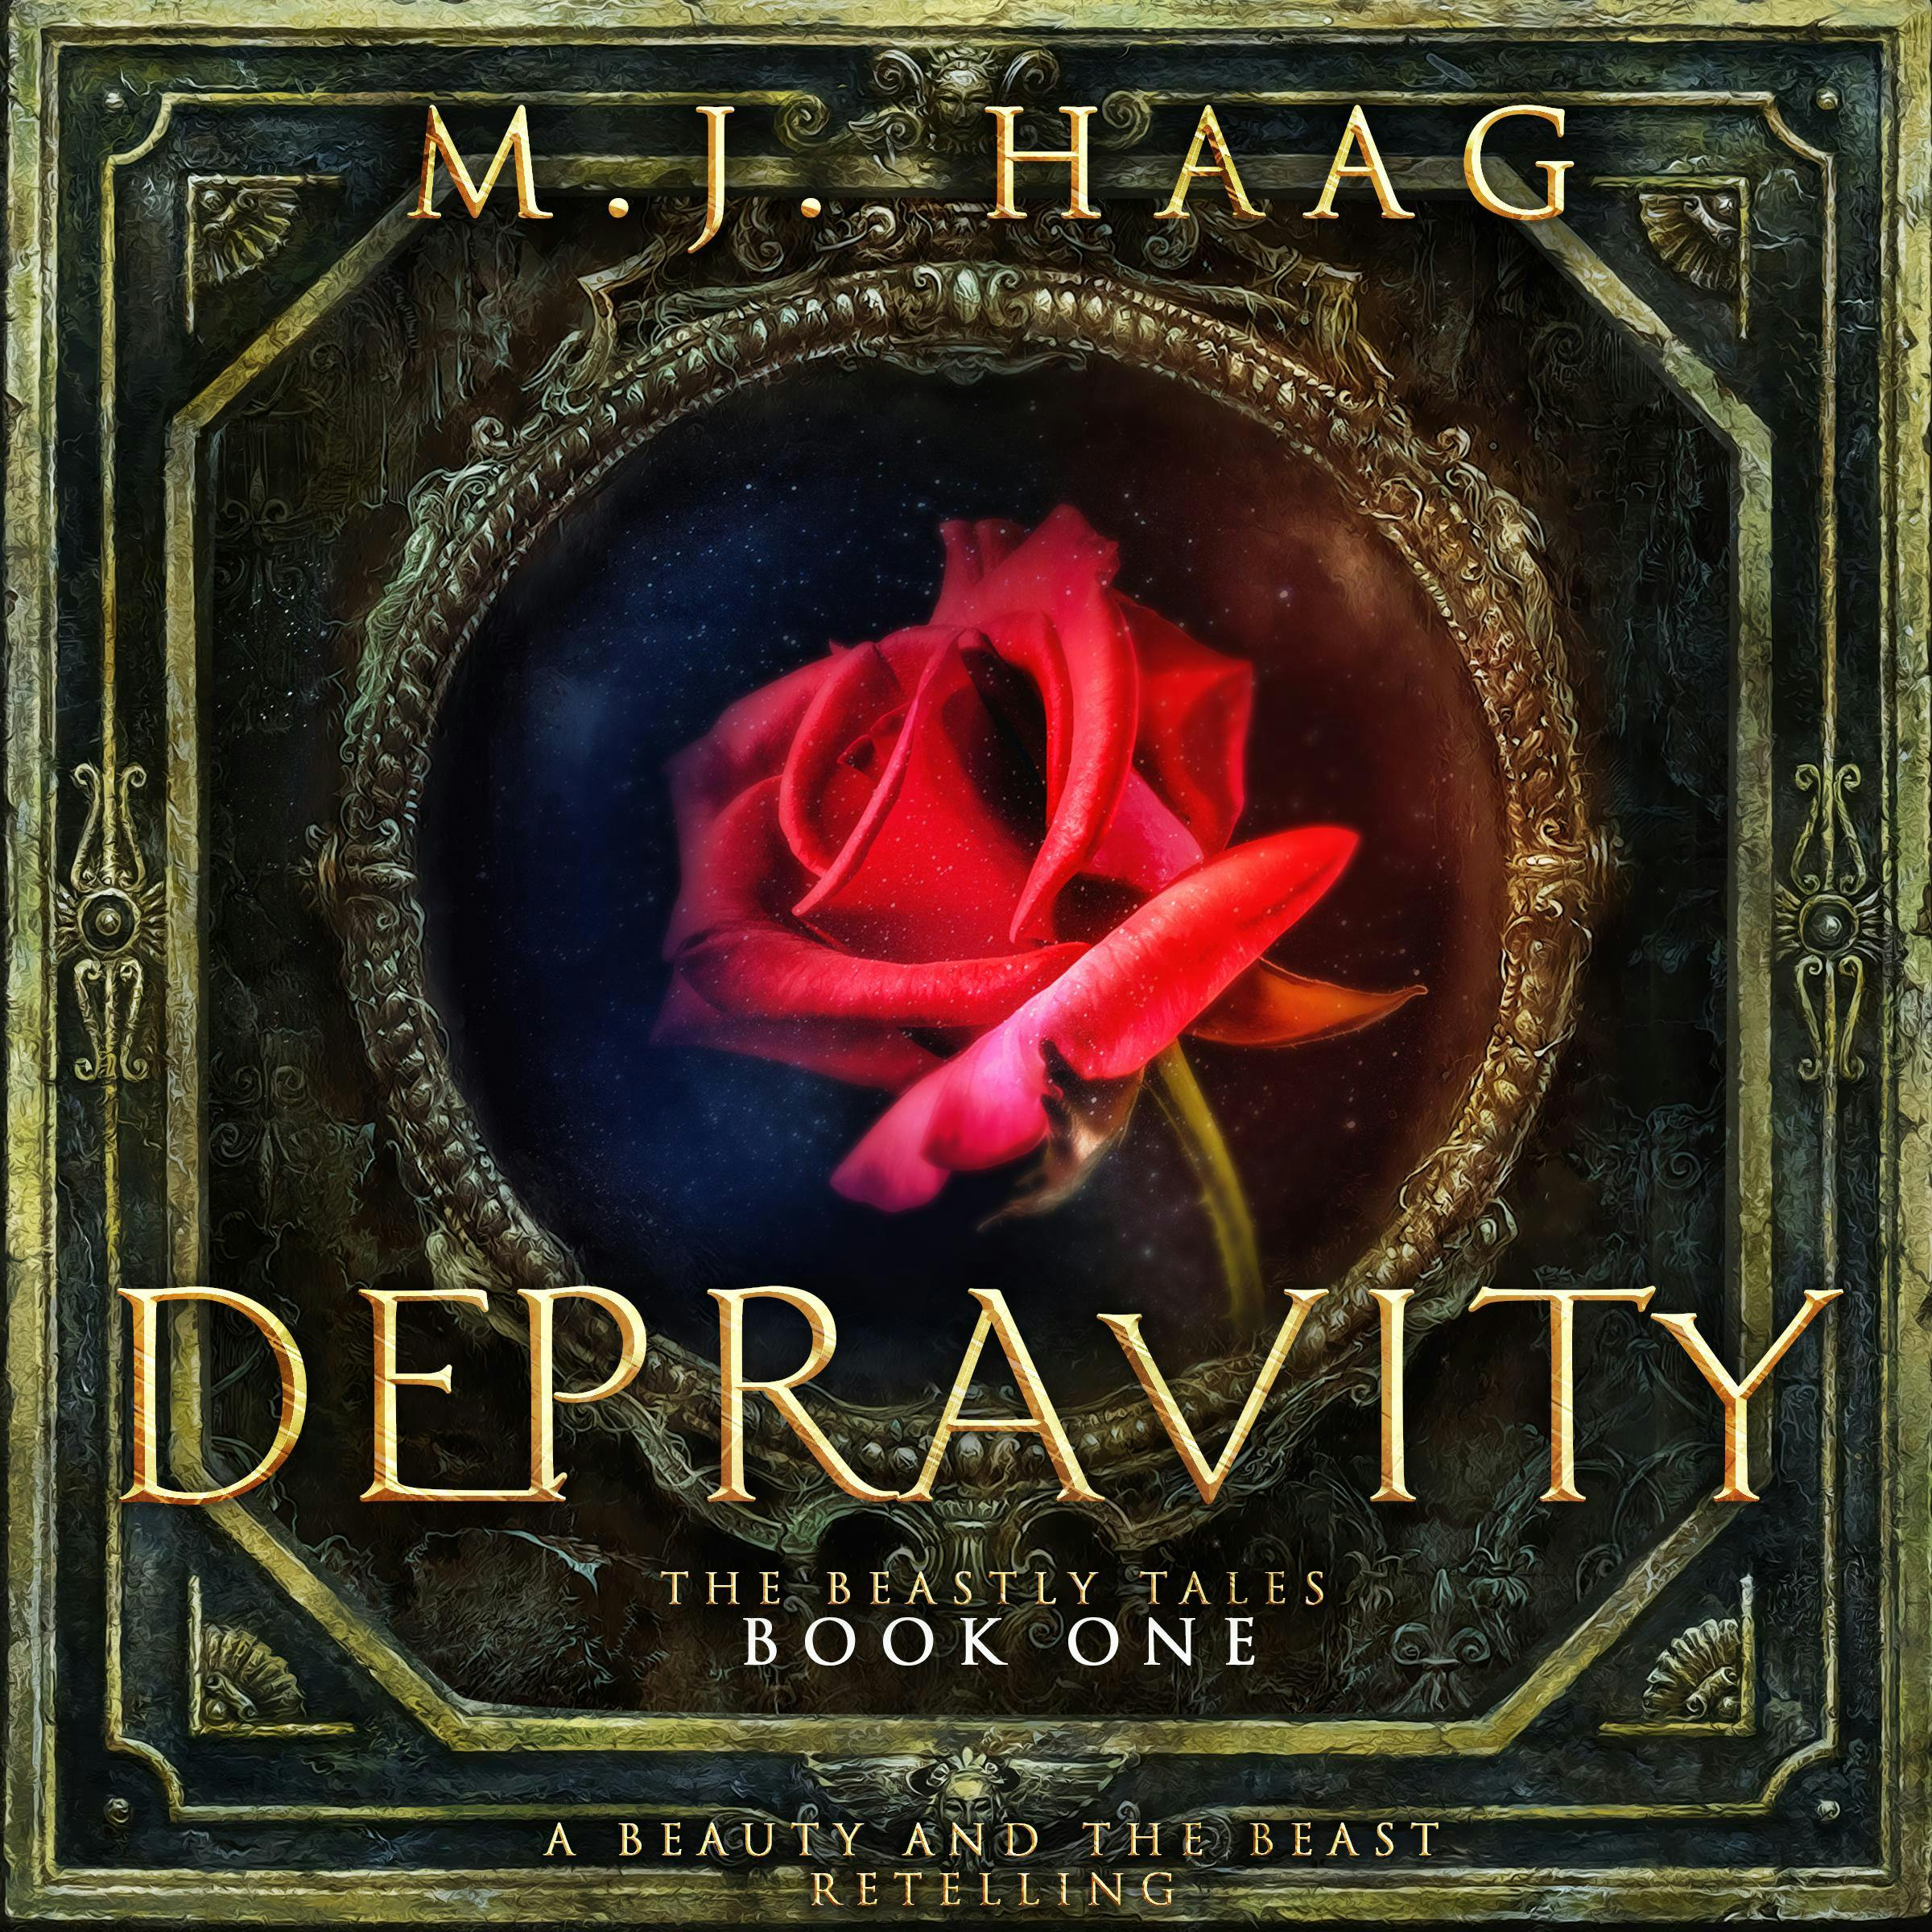 Depravity - M.J. Haag